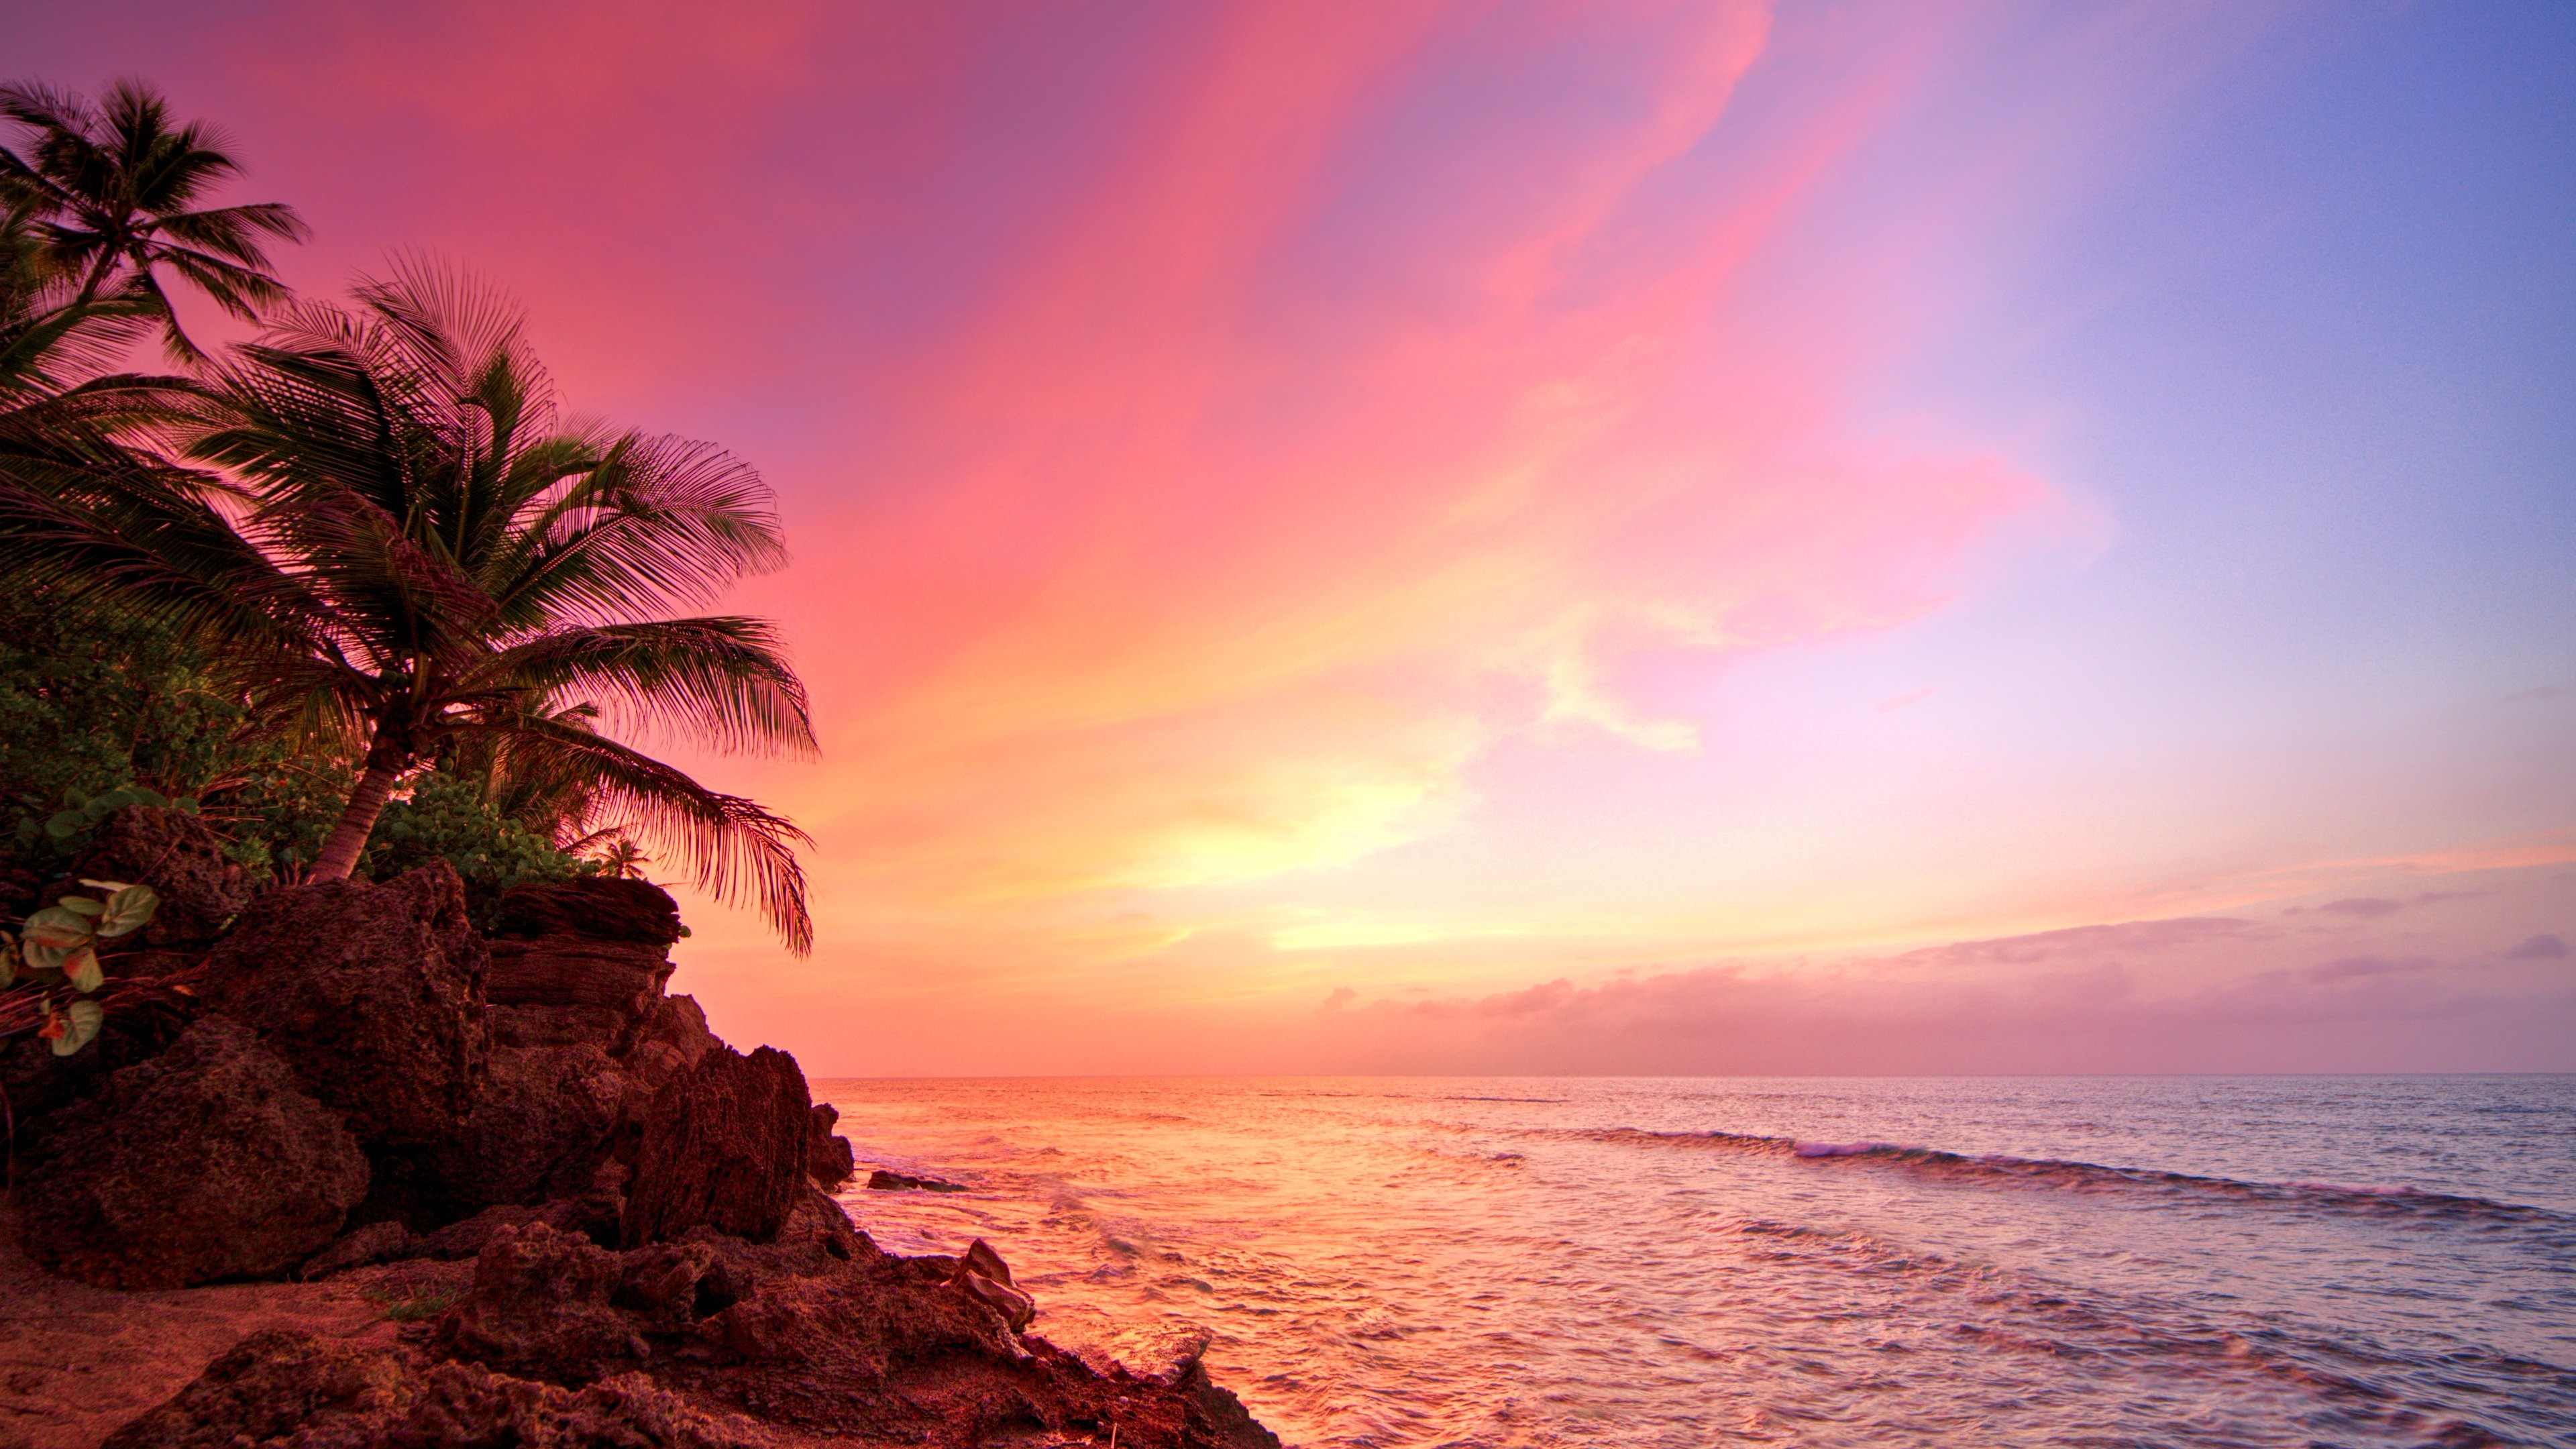 3840x2160 Earth - Sunset Rock Tropical Earth Coast Ocean Sea Puerto Rico Palm Tree  Sky Pink Horizon